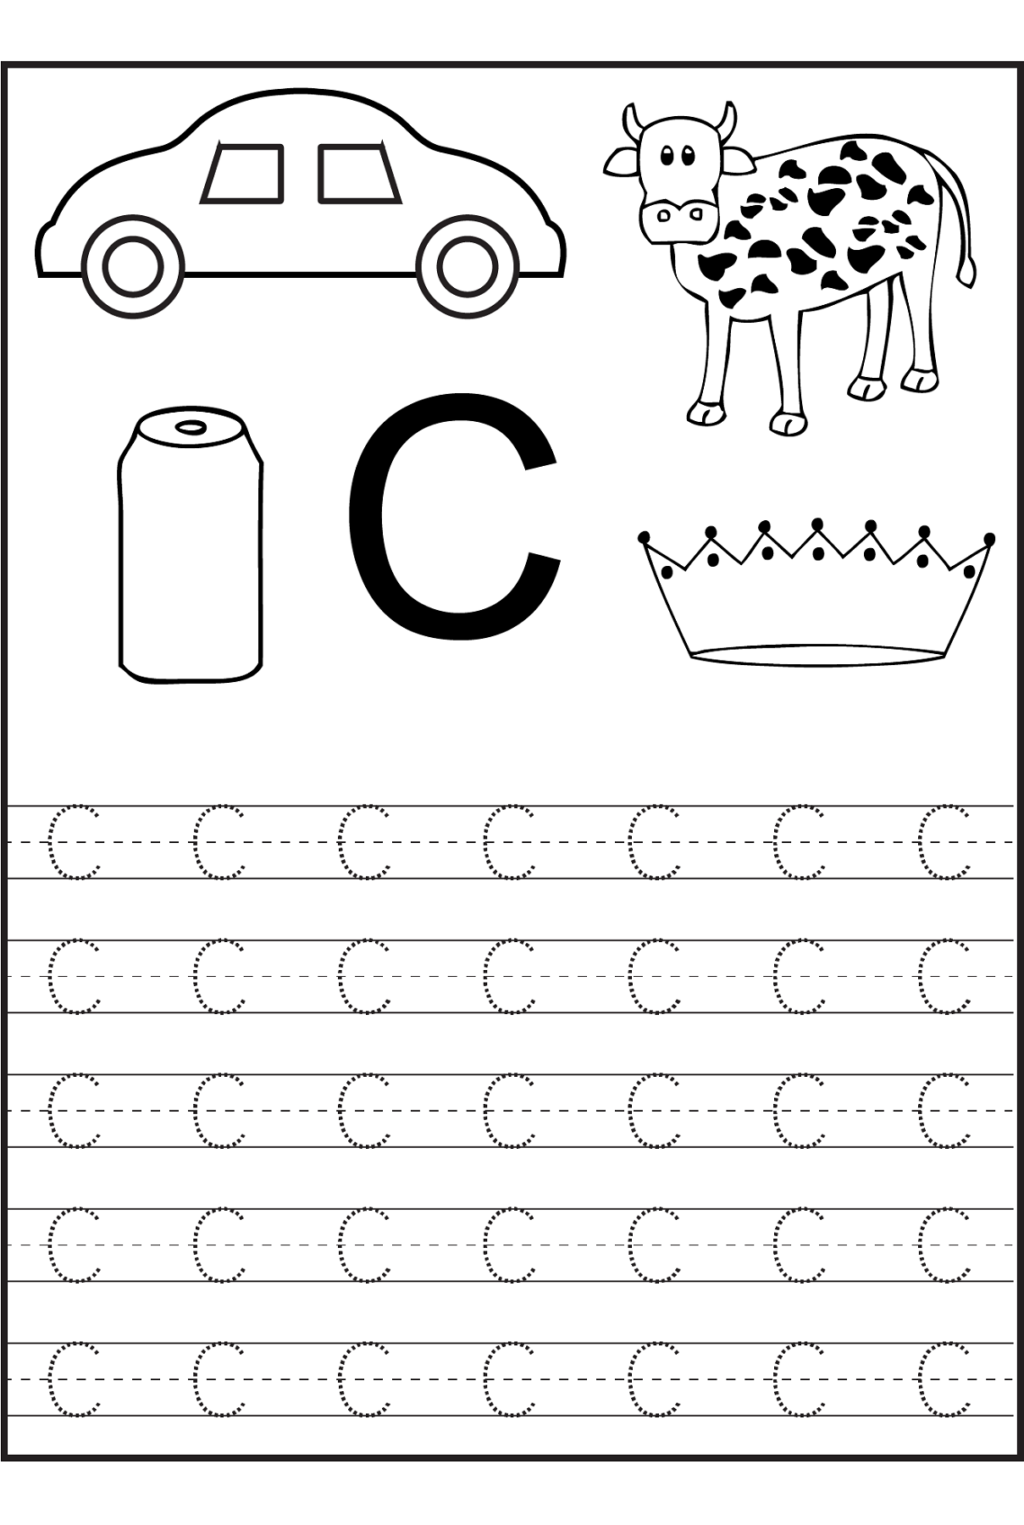 Worksheet ~ Bubble Letter Coloring Sheets Toddler Free in Letter C Worksheets Free